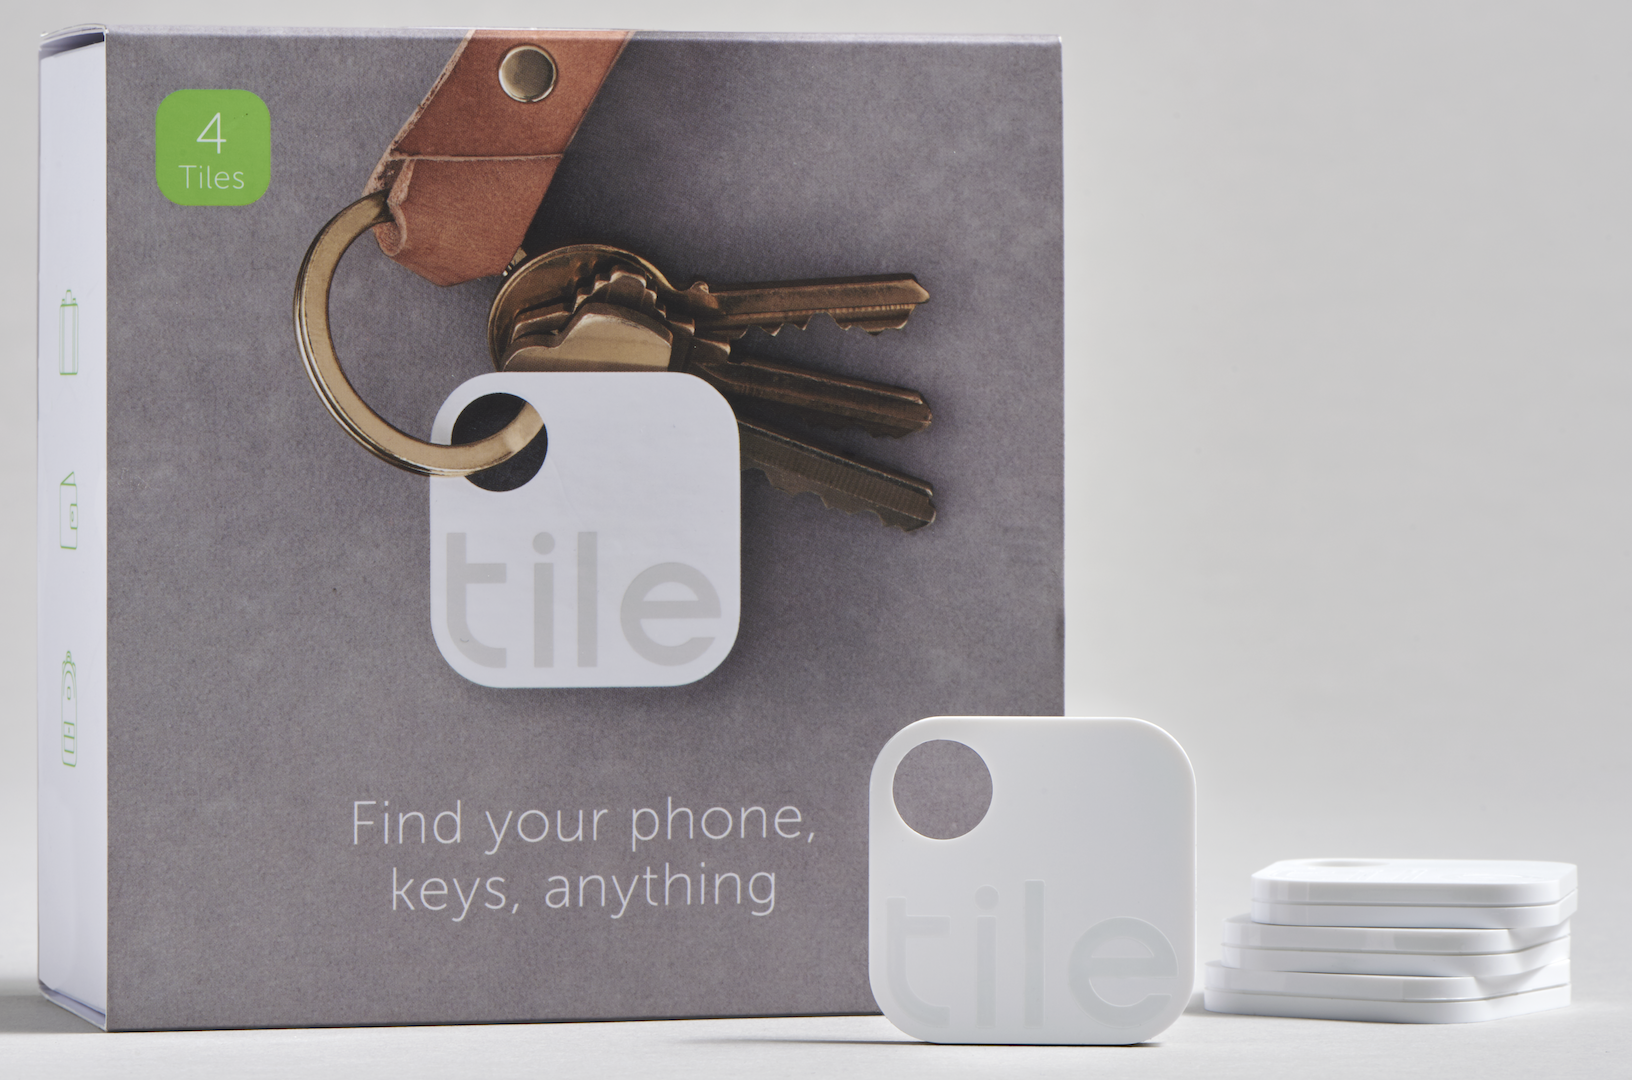 Tile : Never Lose Your Keys Again